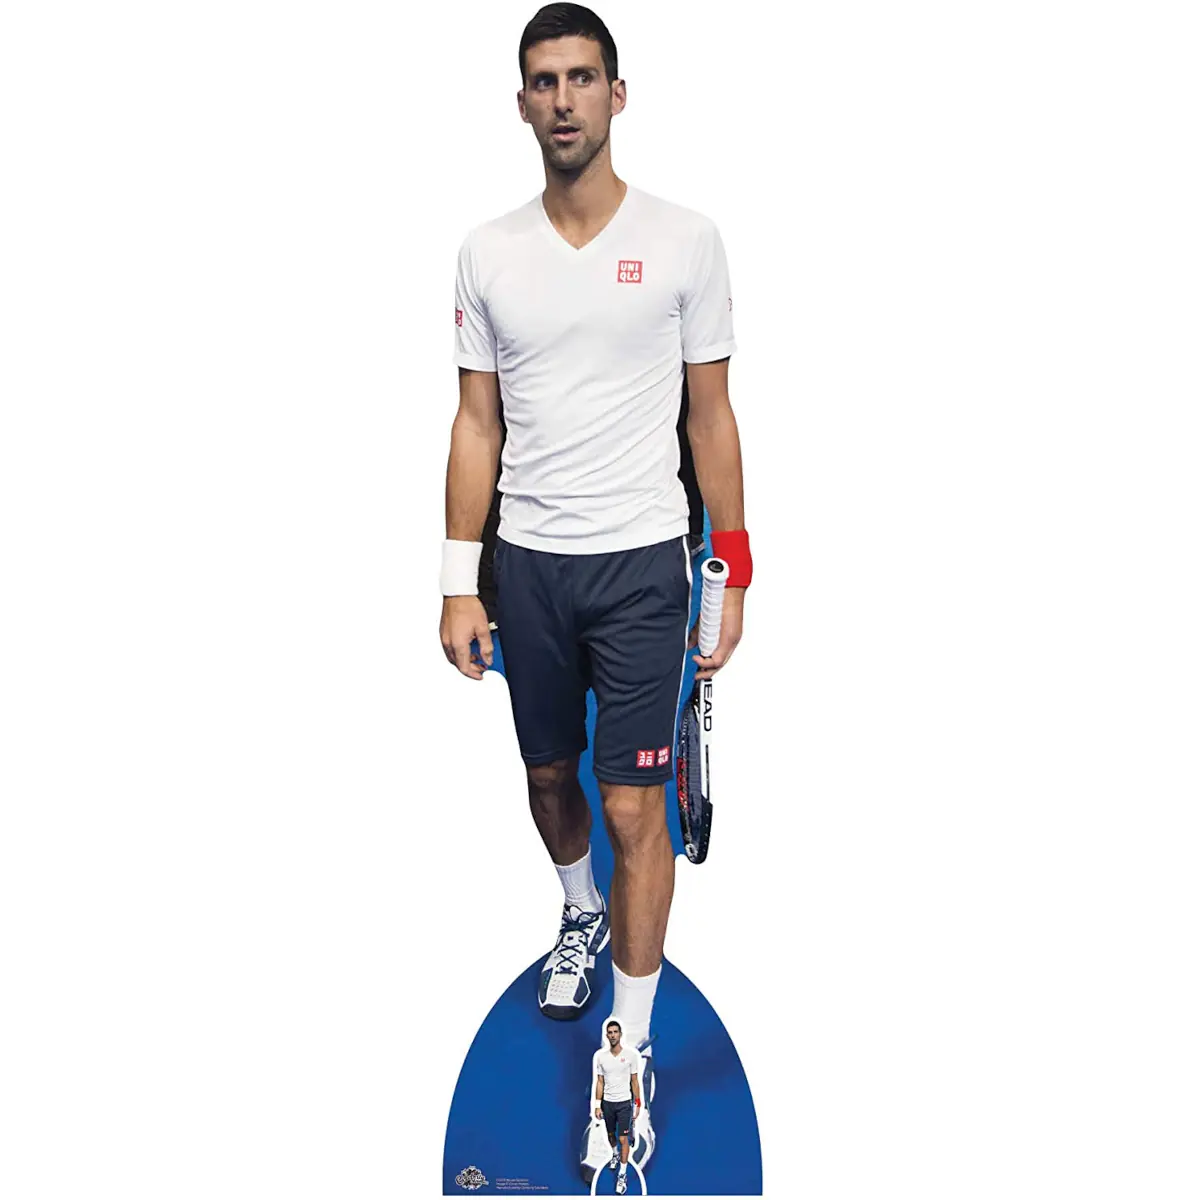 CS676 Novak Djokovic On Court Serbian Tennis Player Lifesize Mini Cardboard Cutout Standee